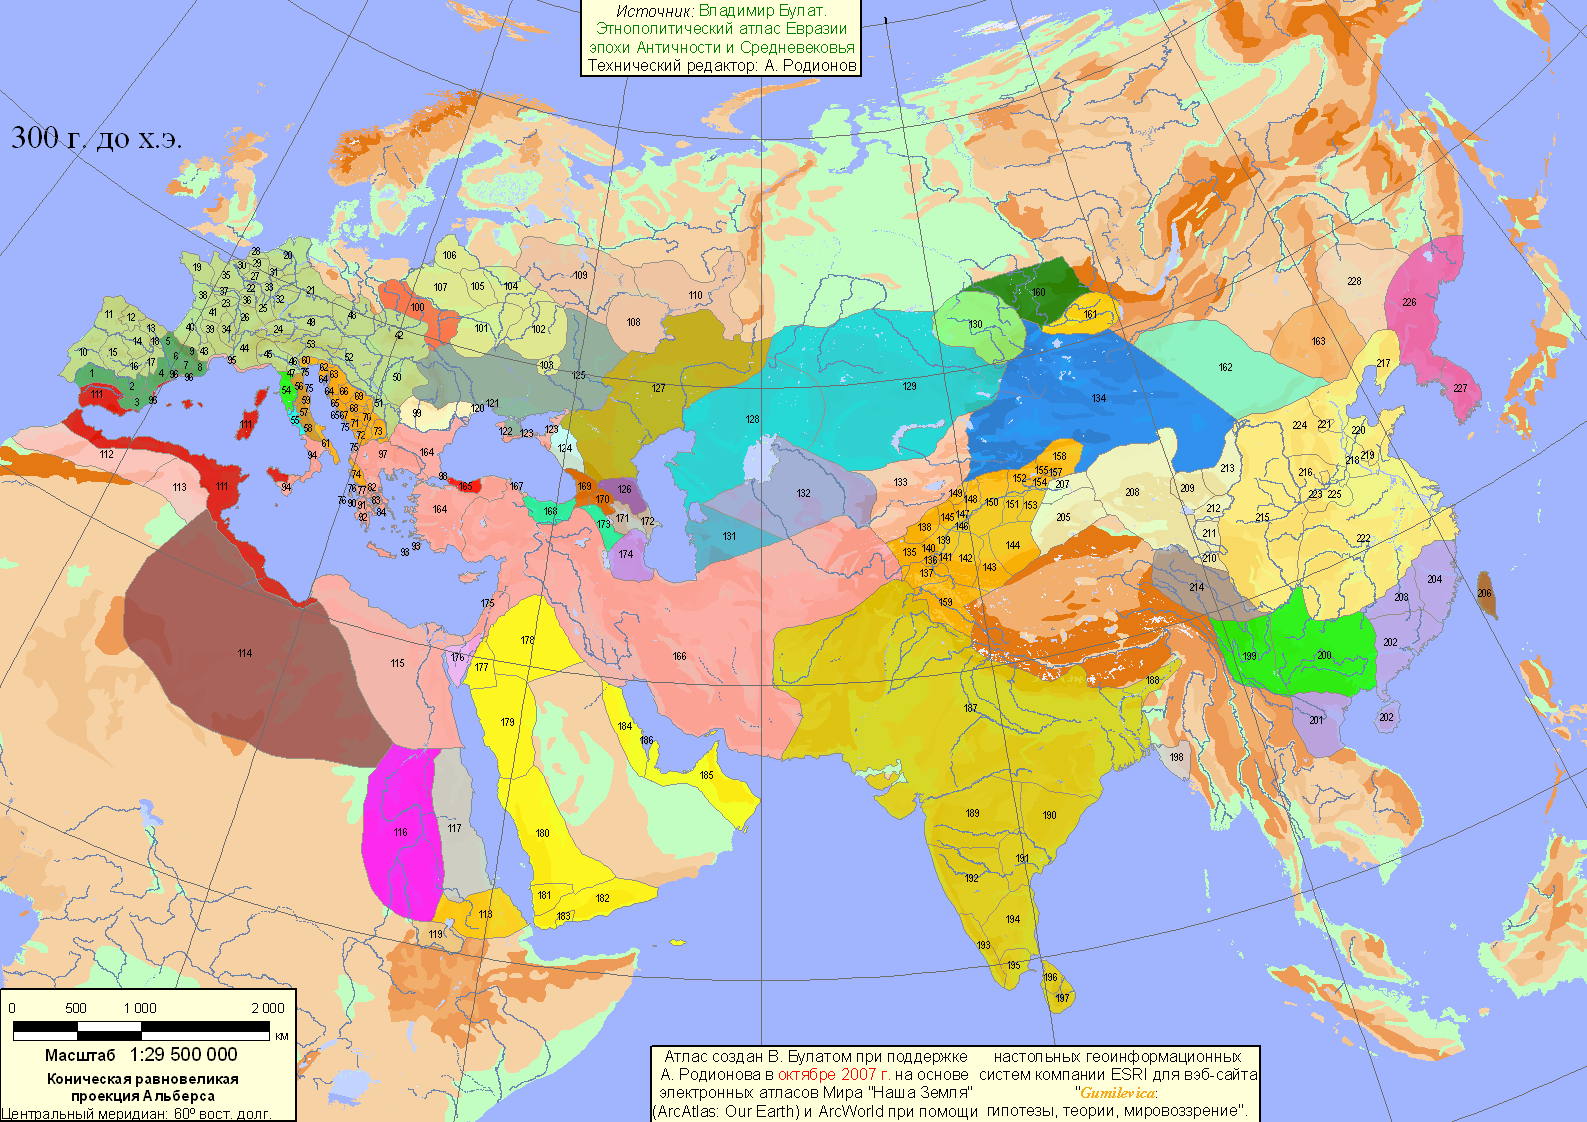 Eurasia - 300 BC (311 Kbytes)